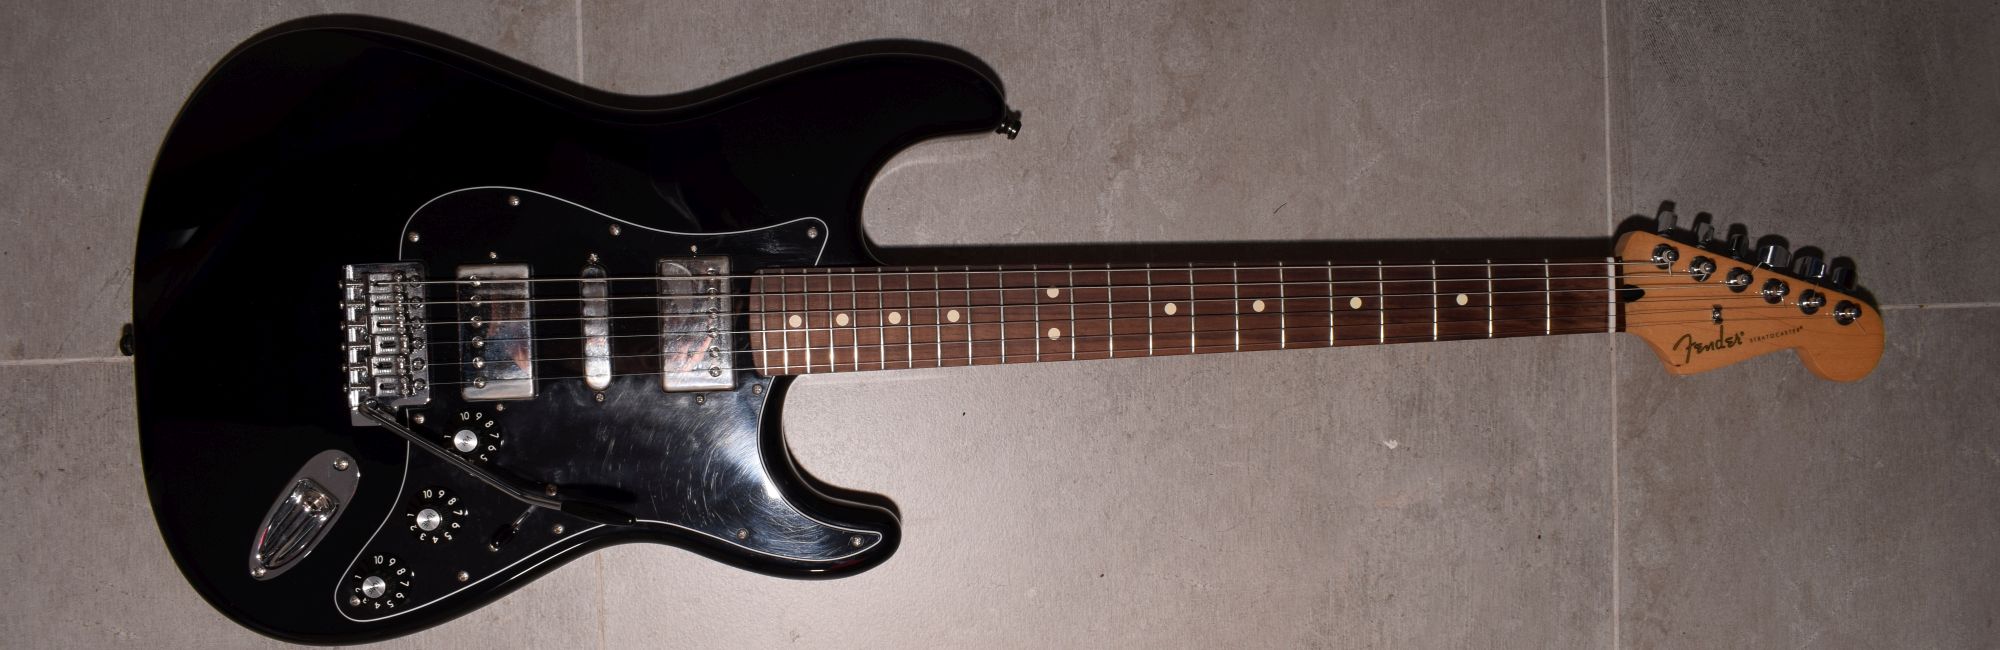 Fender Stratocaster Blacktop HSH